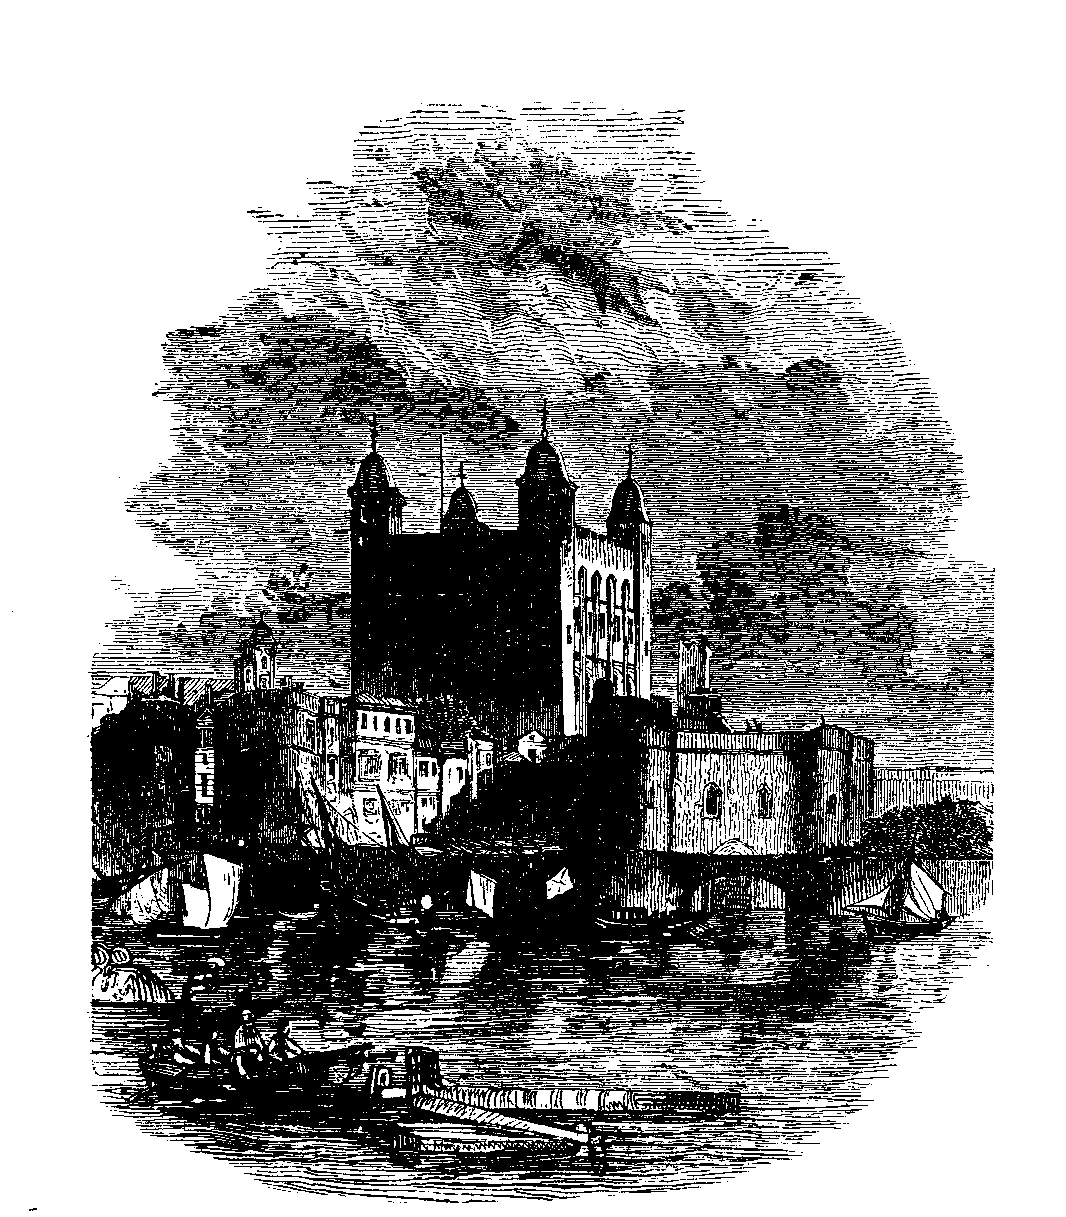 [Illustration] from Richard II by Jacob Abbott